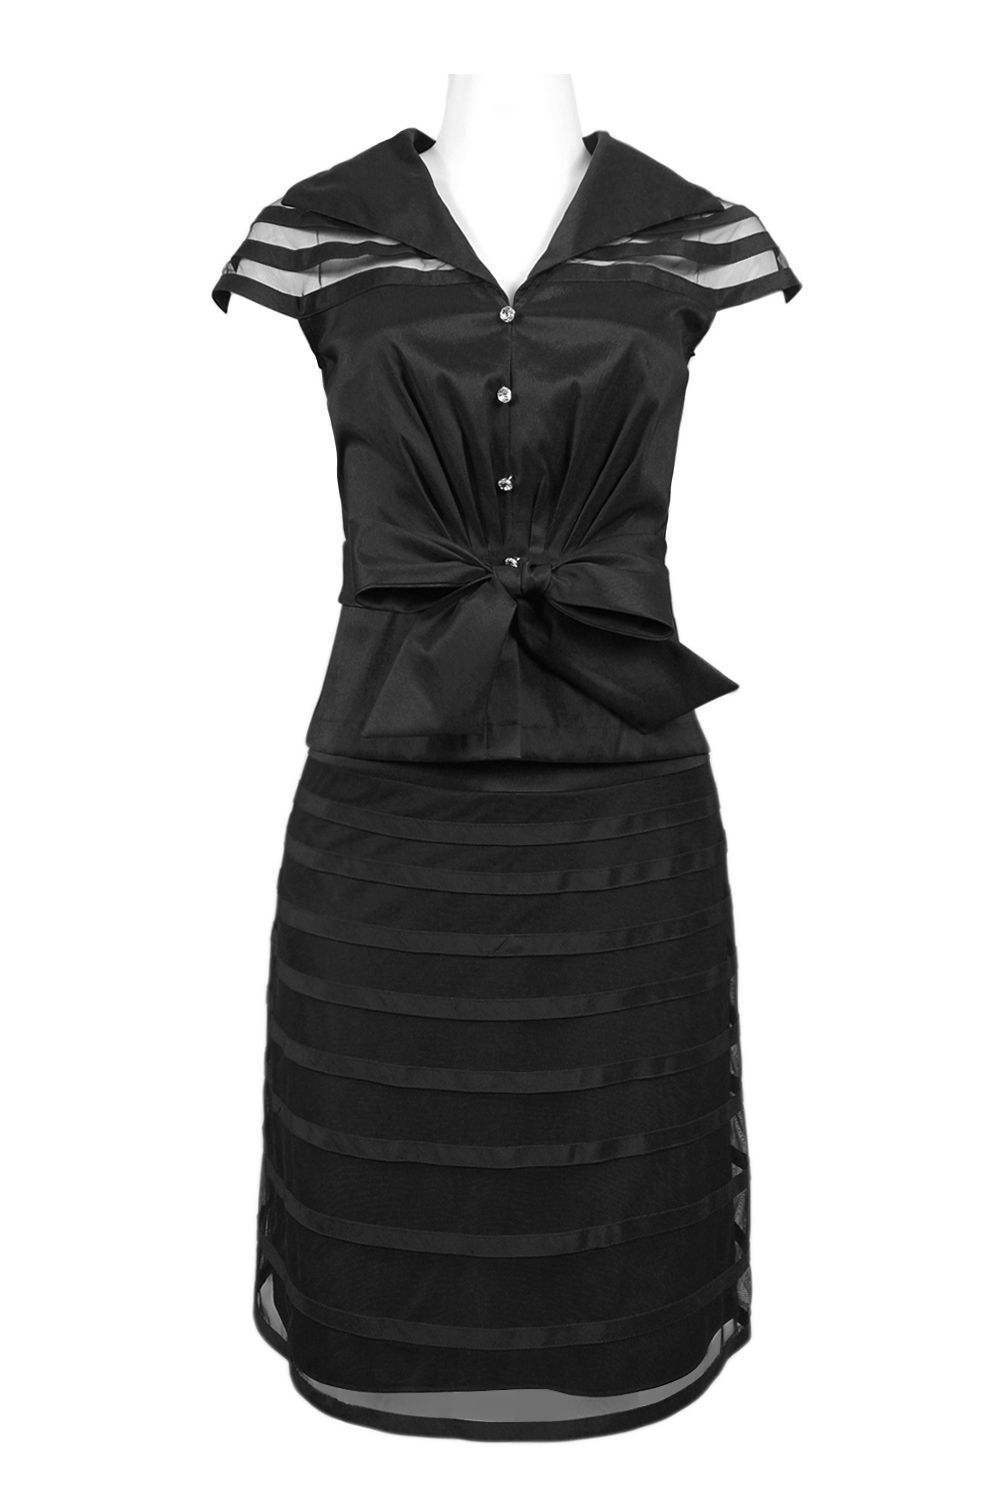 Karen Miller Milla Belle 2PC, Black Day Dress ONLY Size 8 & 12 Remaining ! Women's Apparel